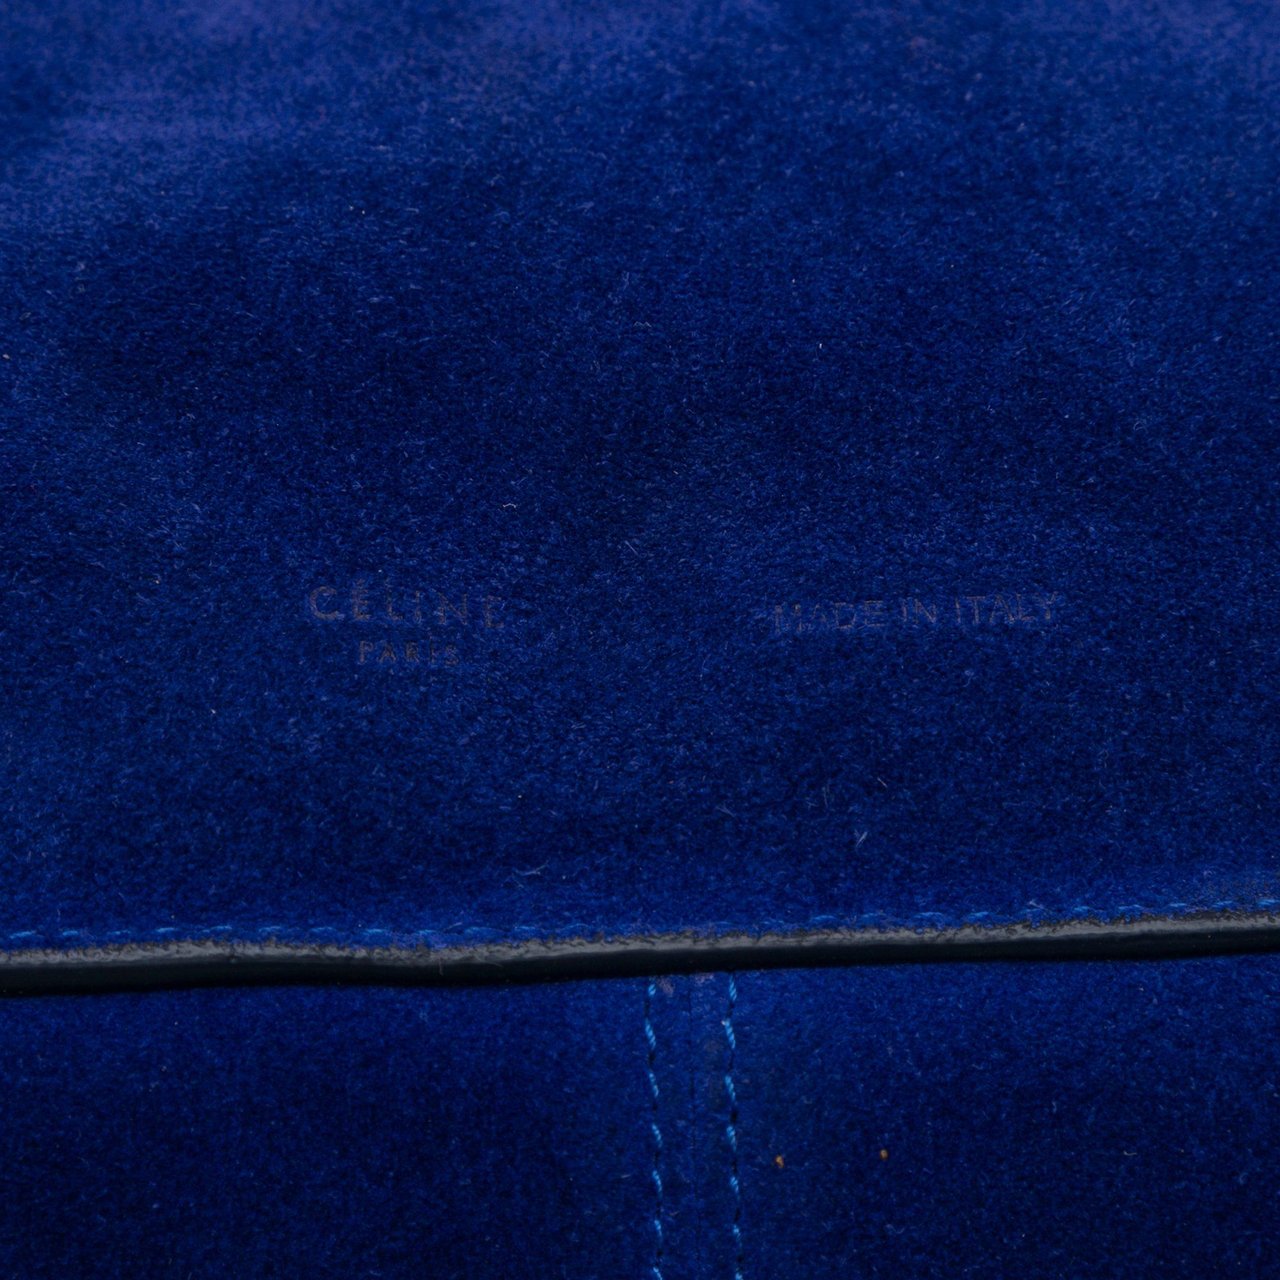 Celine Suede Gourmette Chain Shoulder Bag Blauw